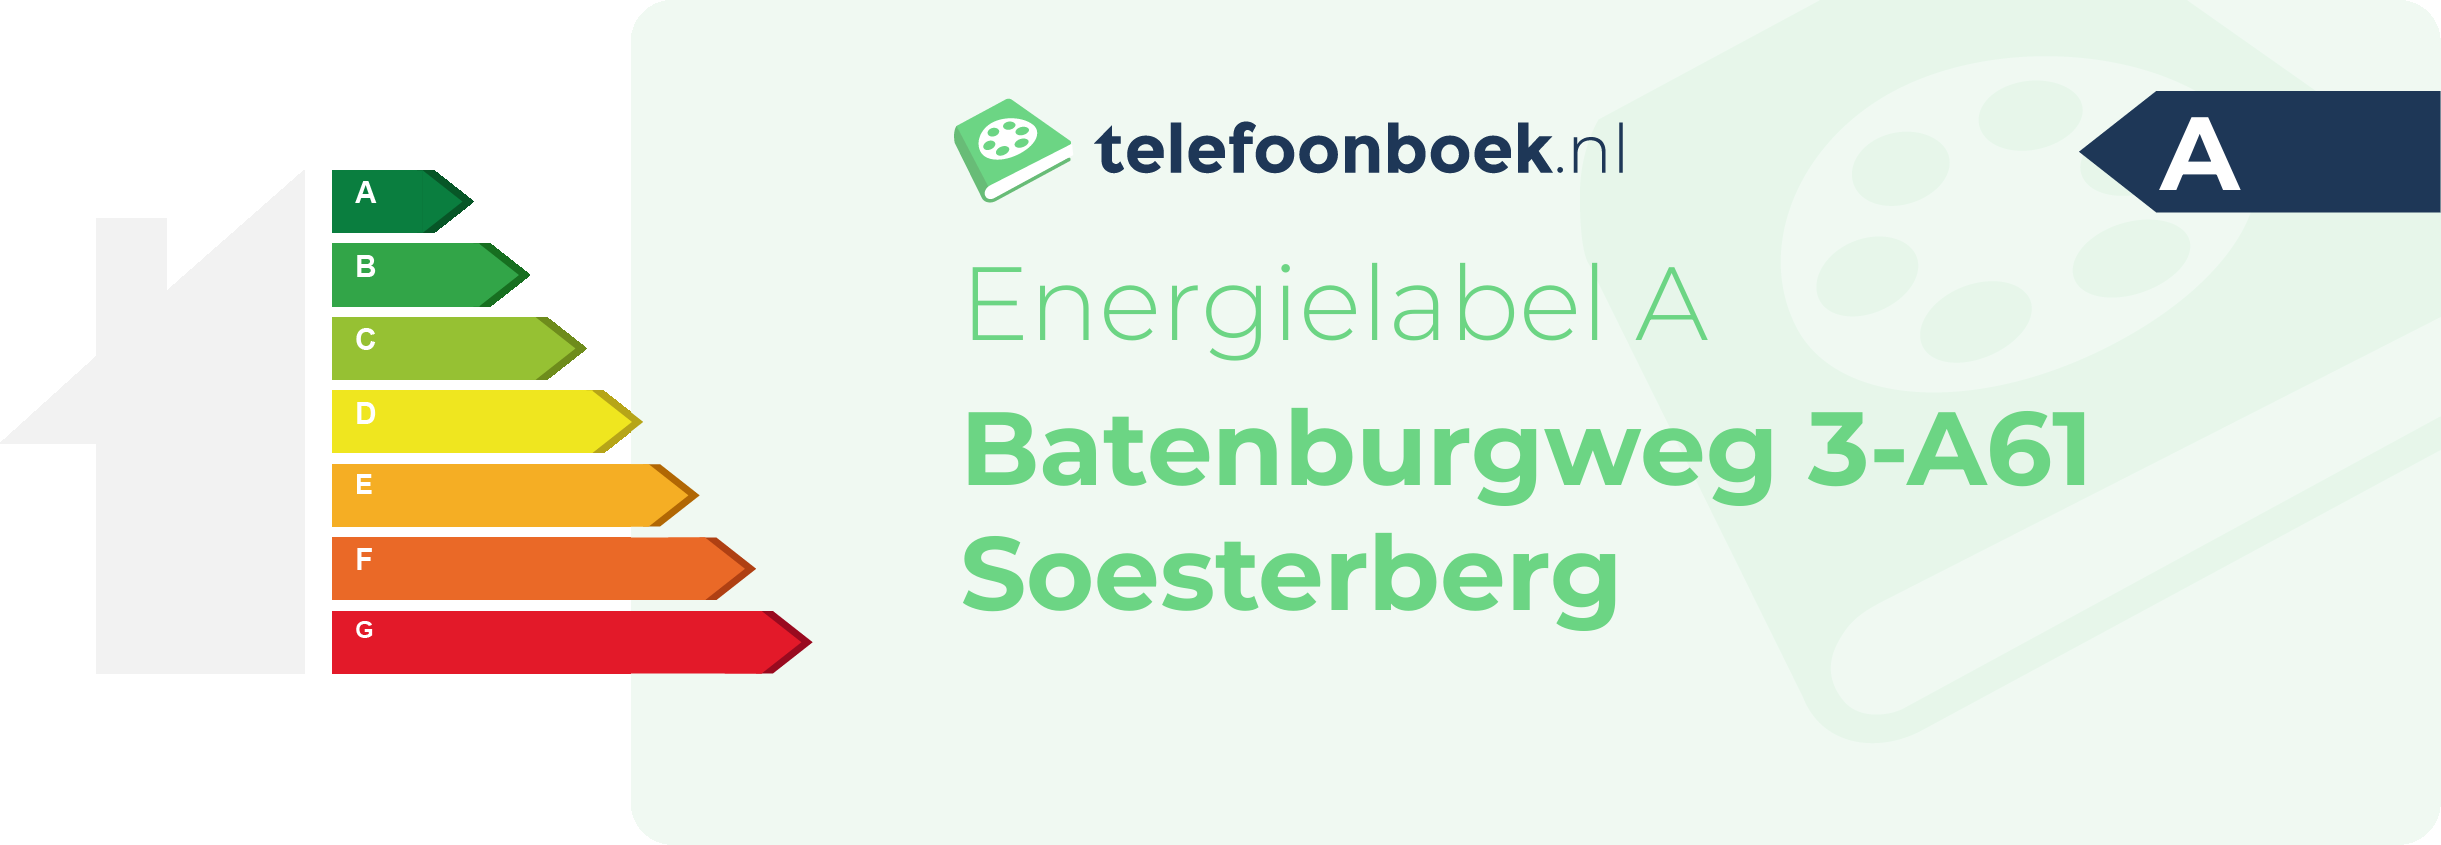 Energielabel Batenburgweg 3-A61 Soesterberg